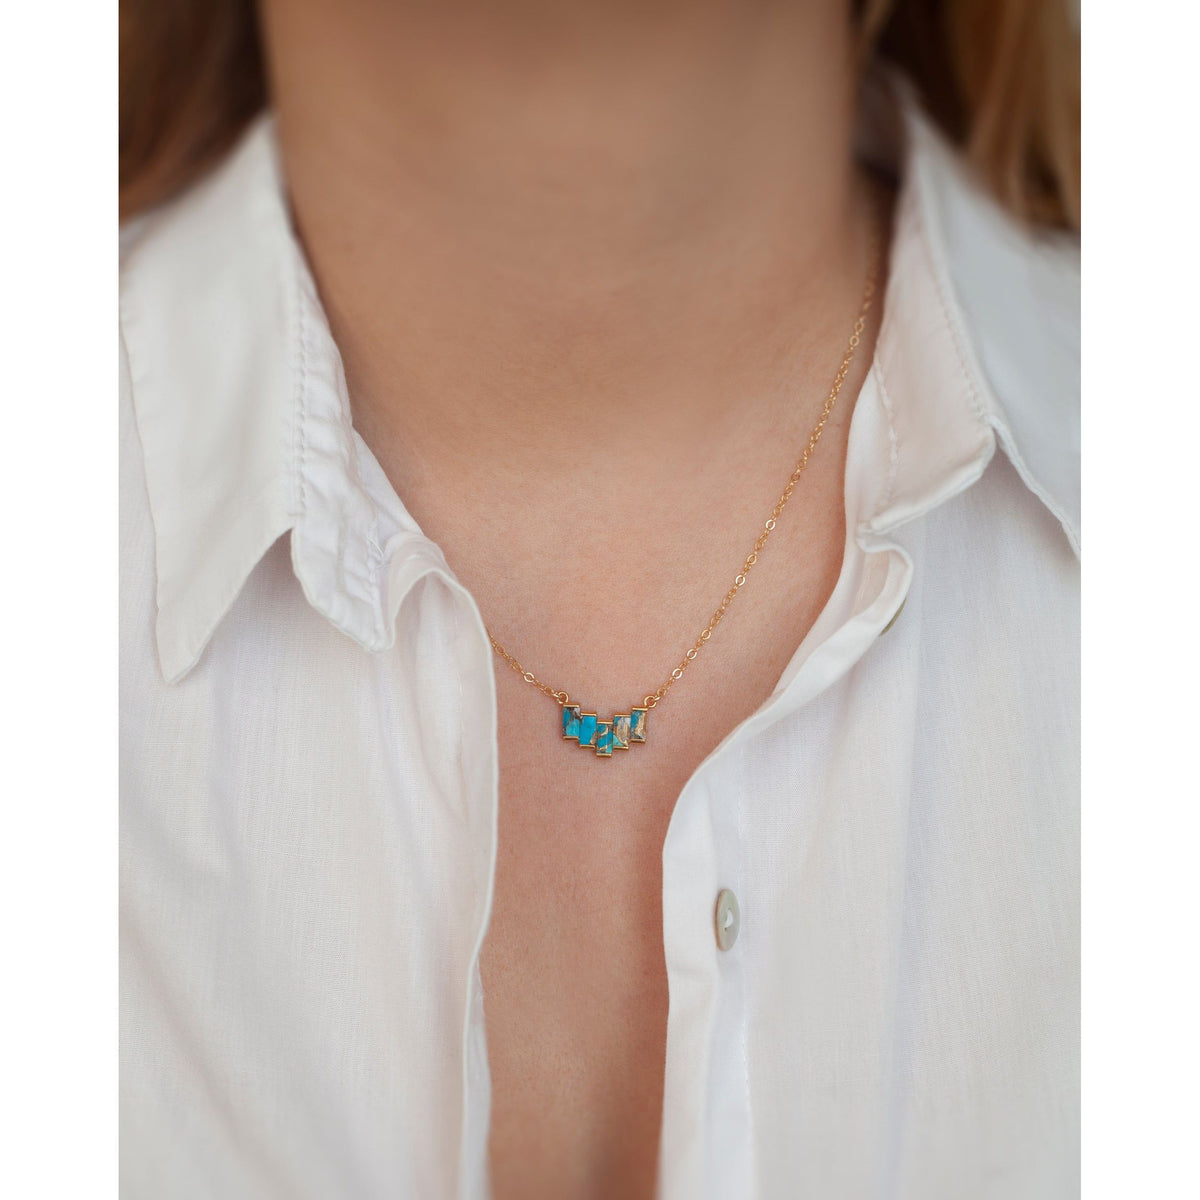 Doris Oyster Turquoise Baguette Necklace by Capucinne Blue